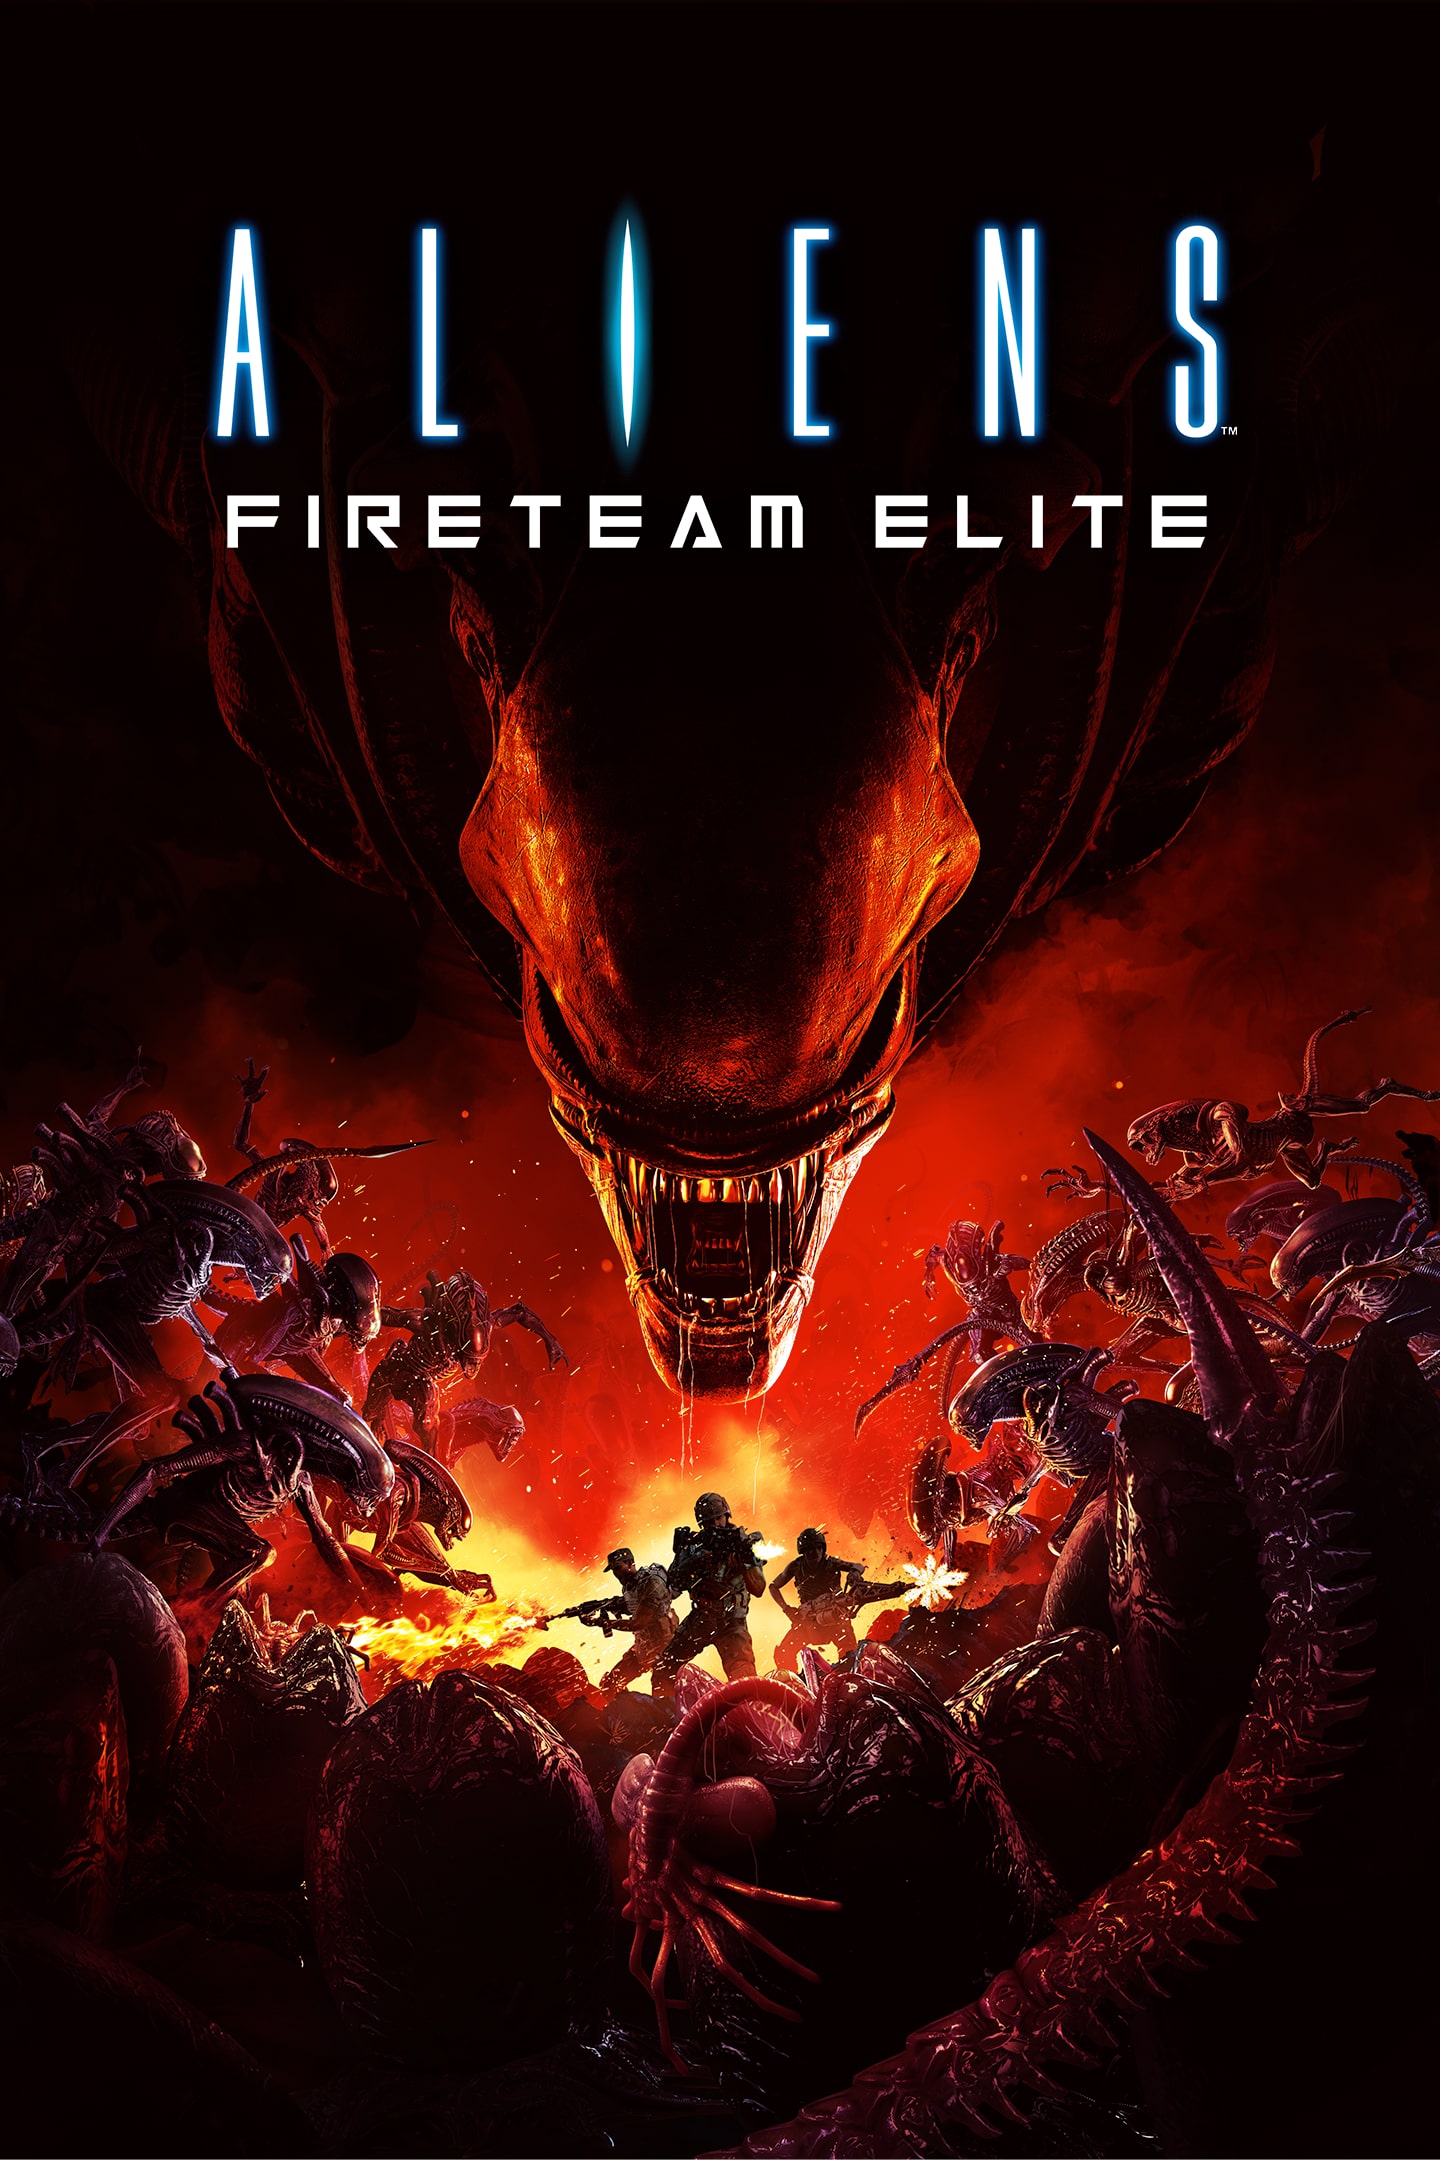 Jogo PS4 Aliens: Fireteam Elite